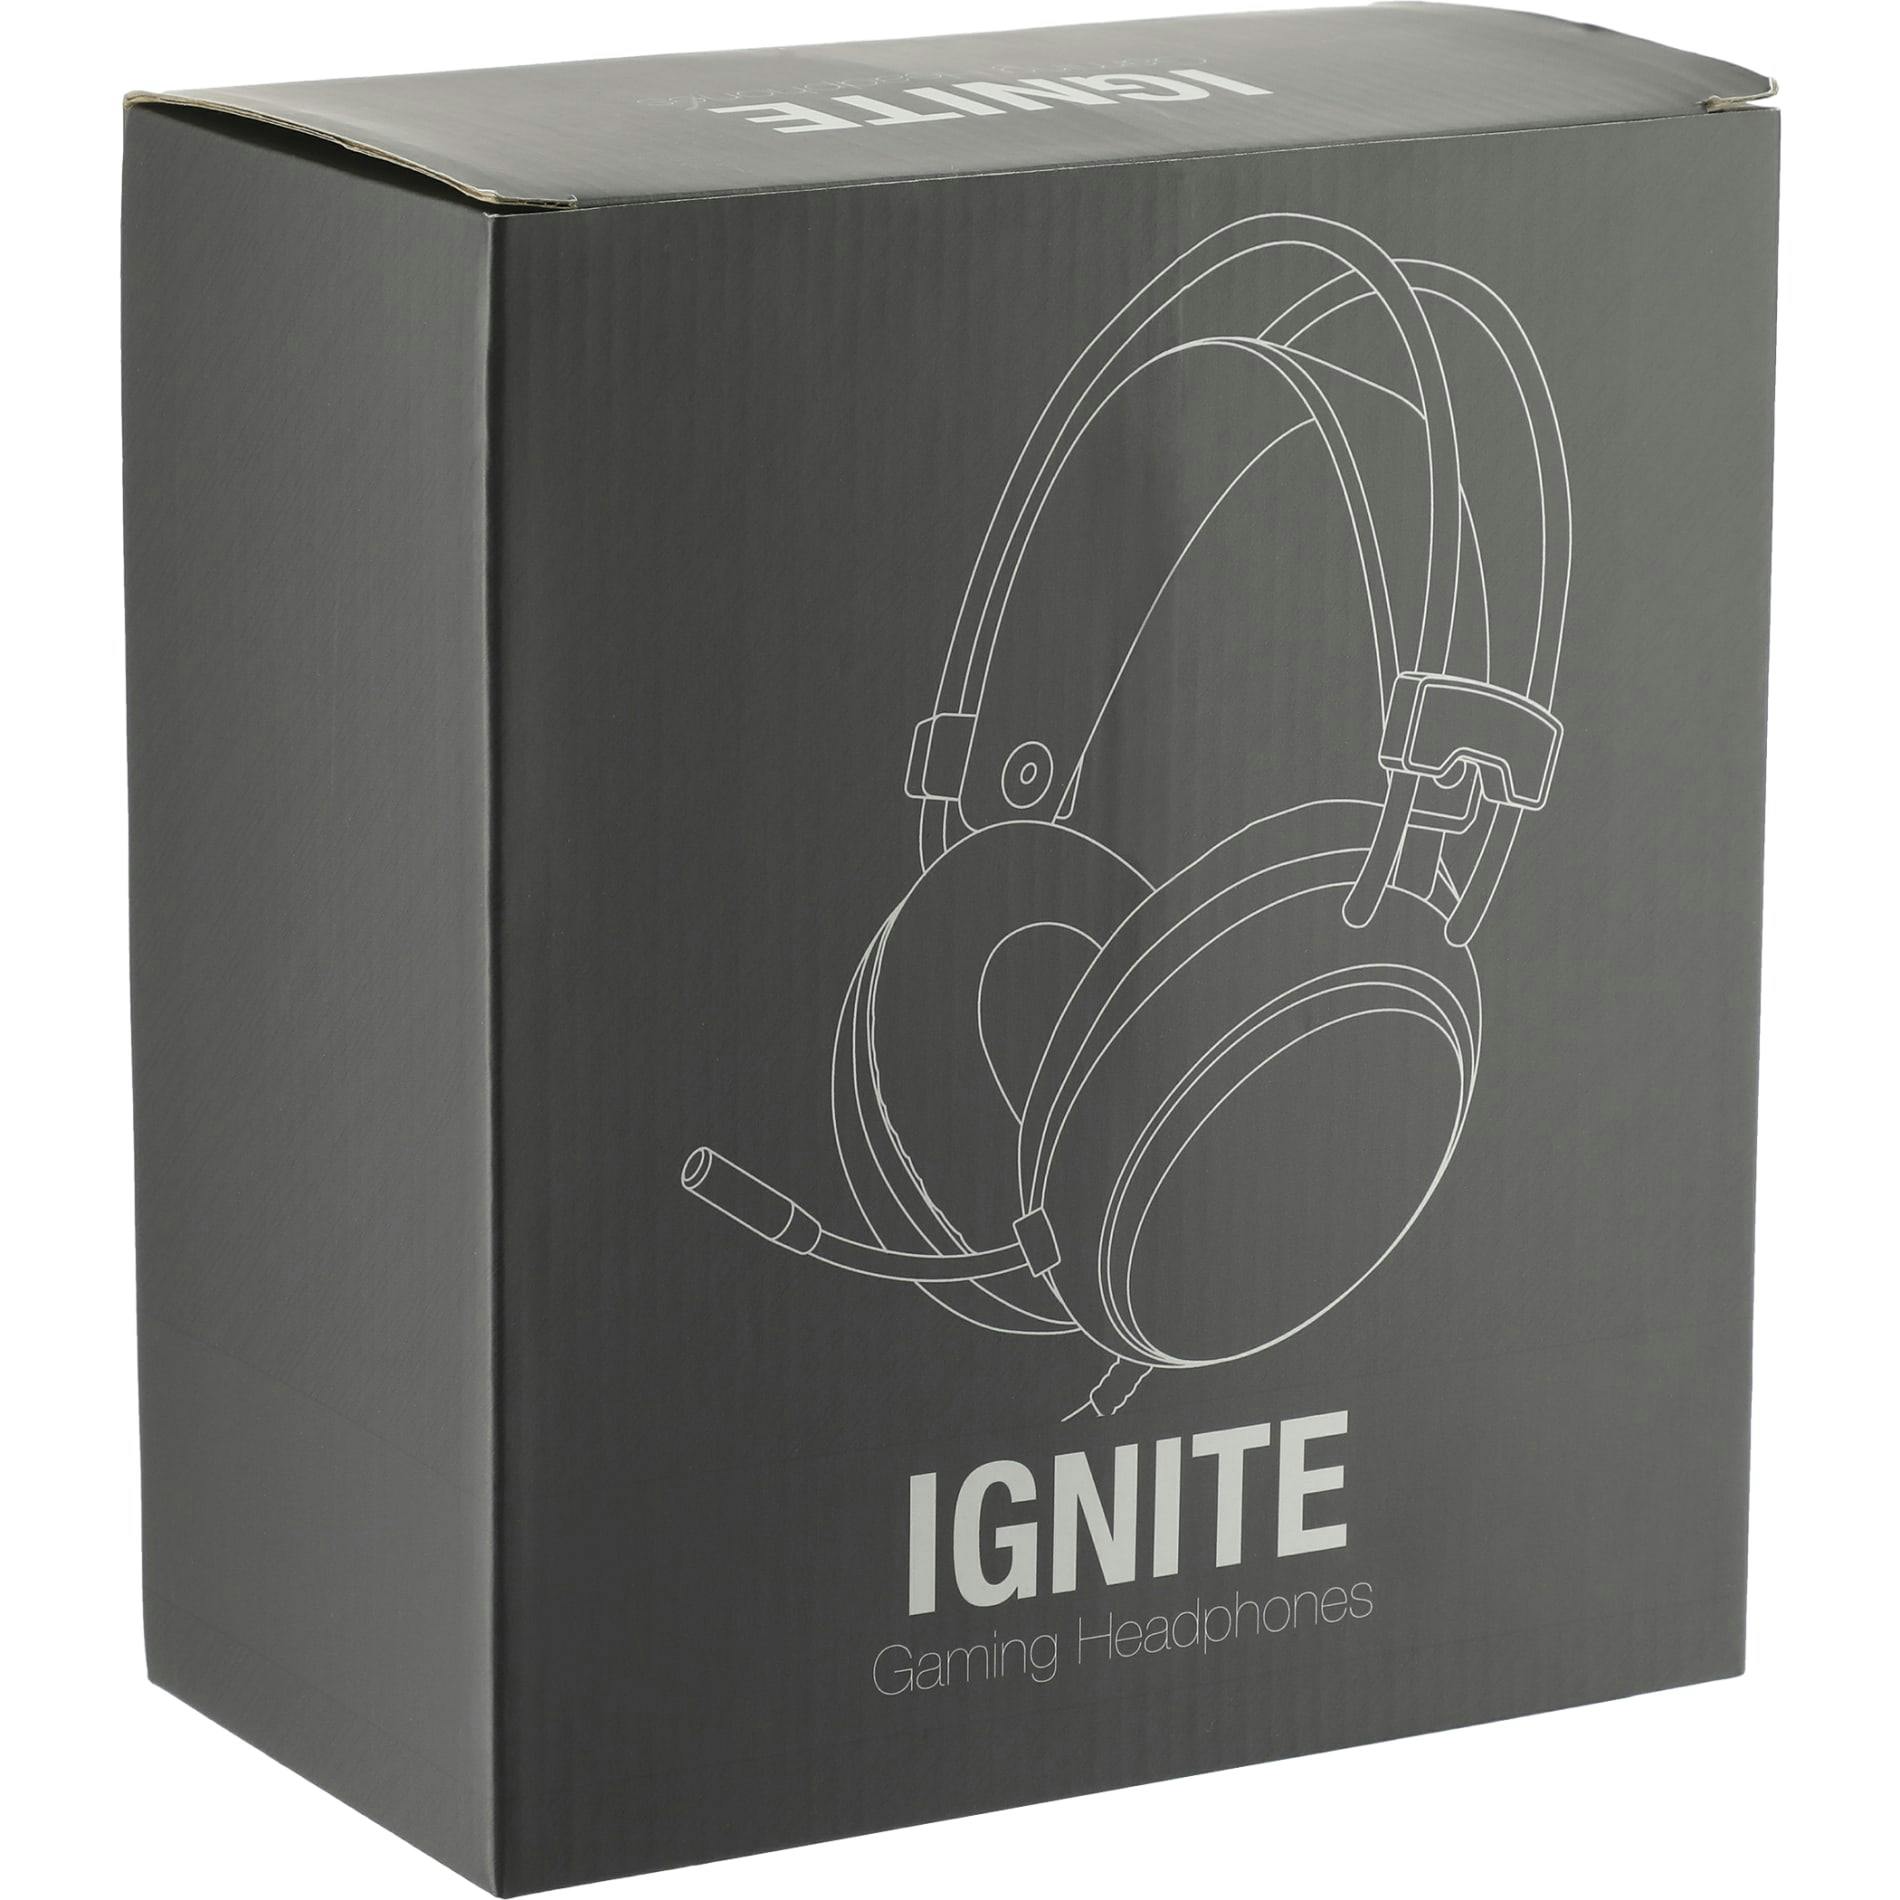 Ignite Gaming Headphones - additional Image 7